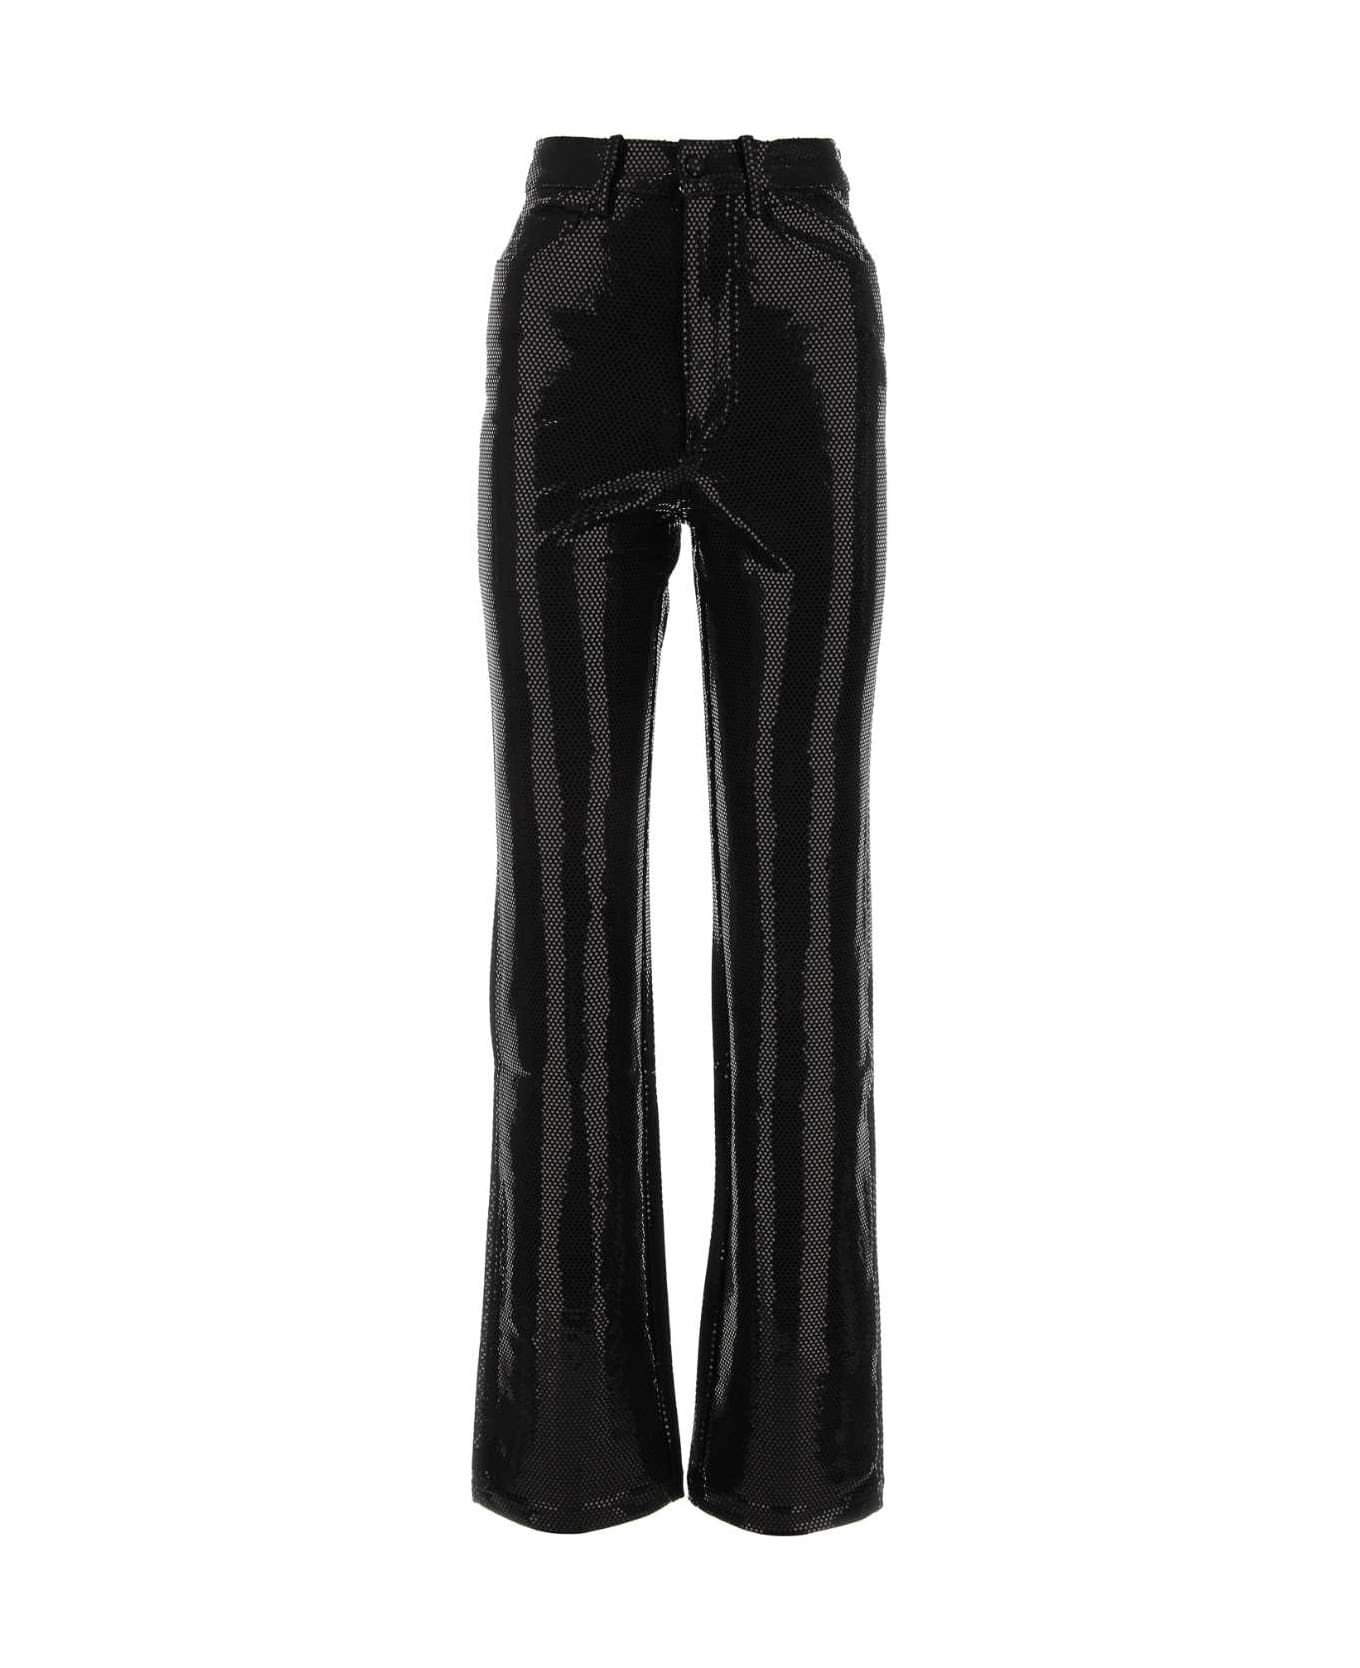 Rotate by Birger Christensen Black Stretch Jersey Pant - BLACK